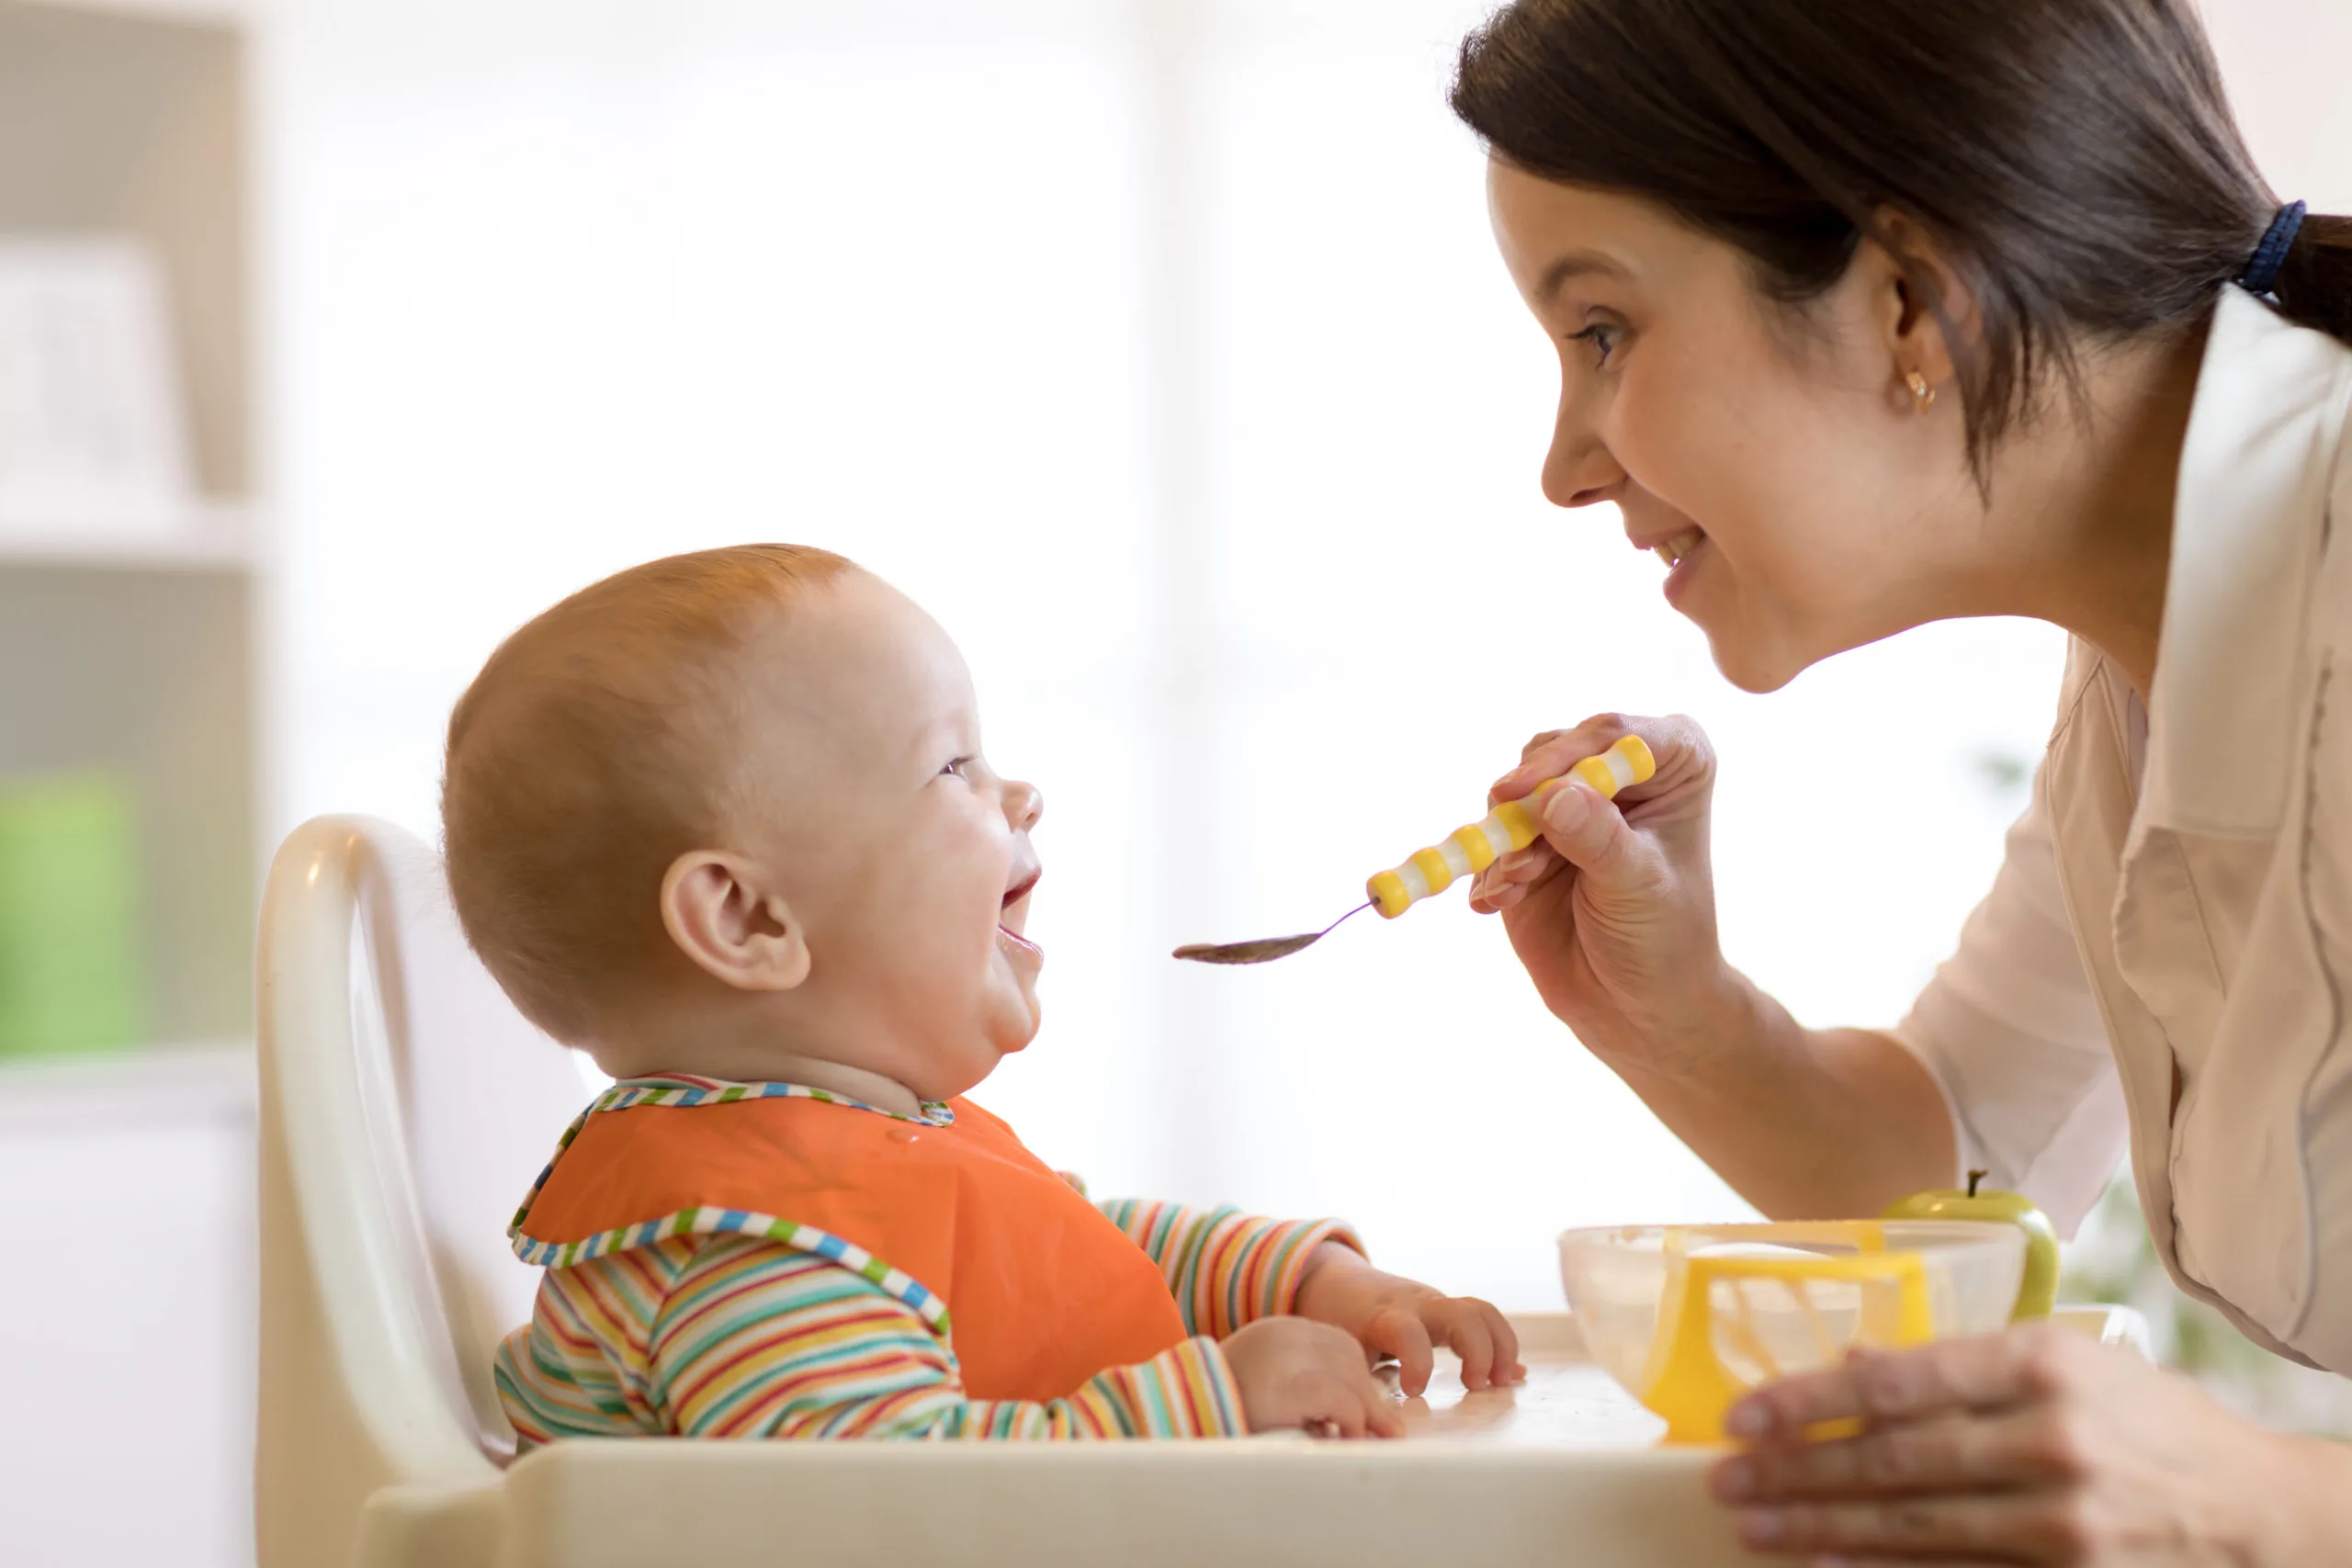 Perbedaan Gagging dan Choking pada Bayi, Mengenal Tanda Bahaya dan Tindakan yang Tepat